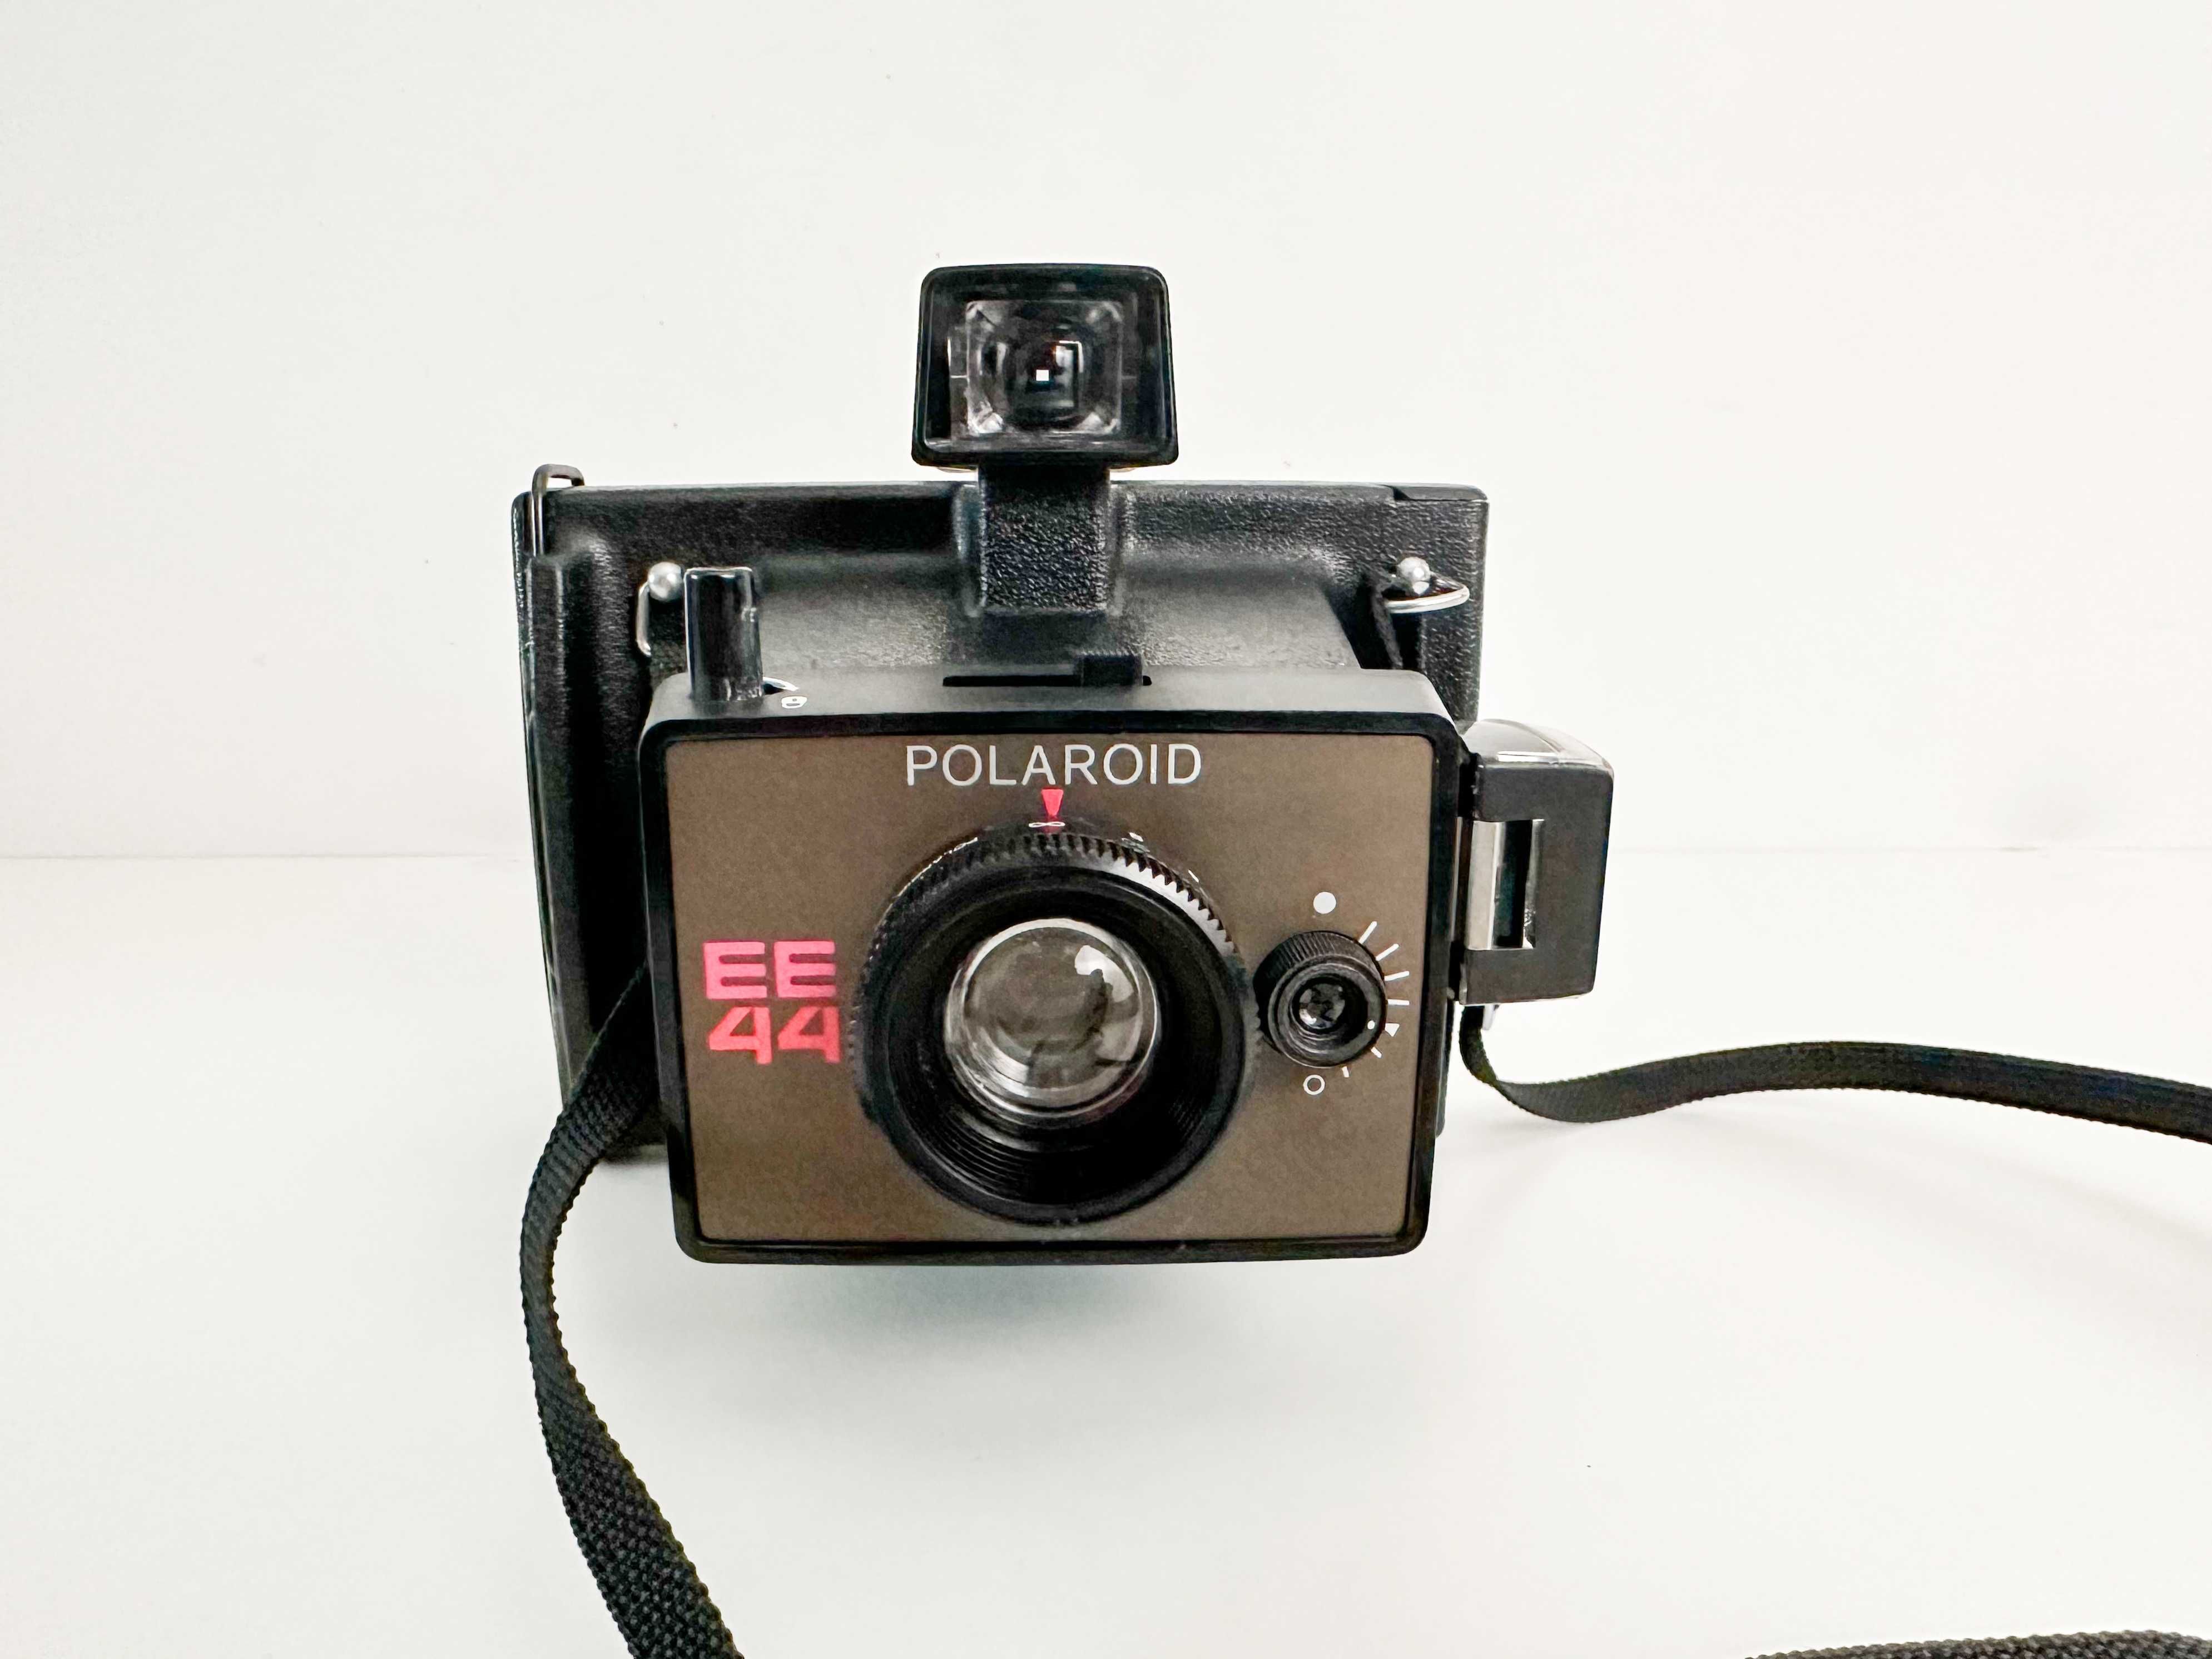 Aparat Polaroid Land Camera E44 komplet